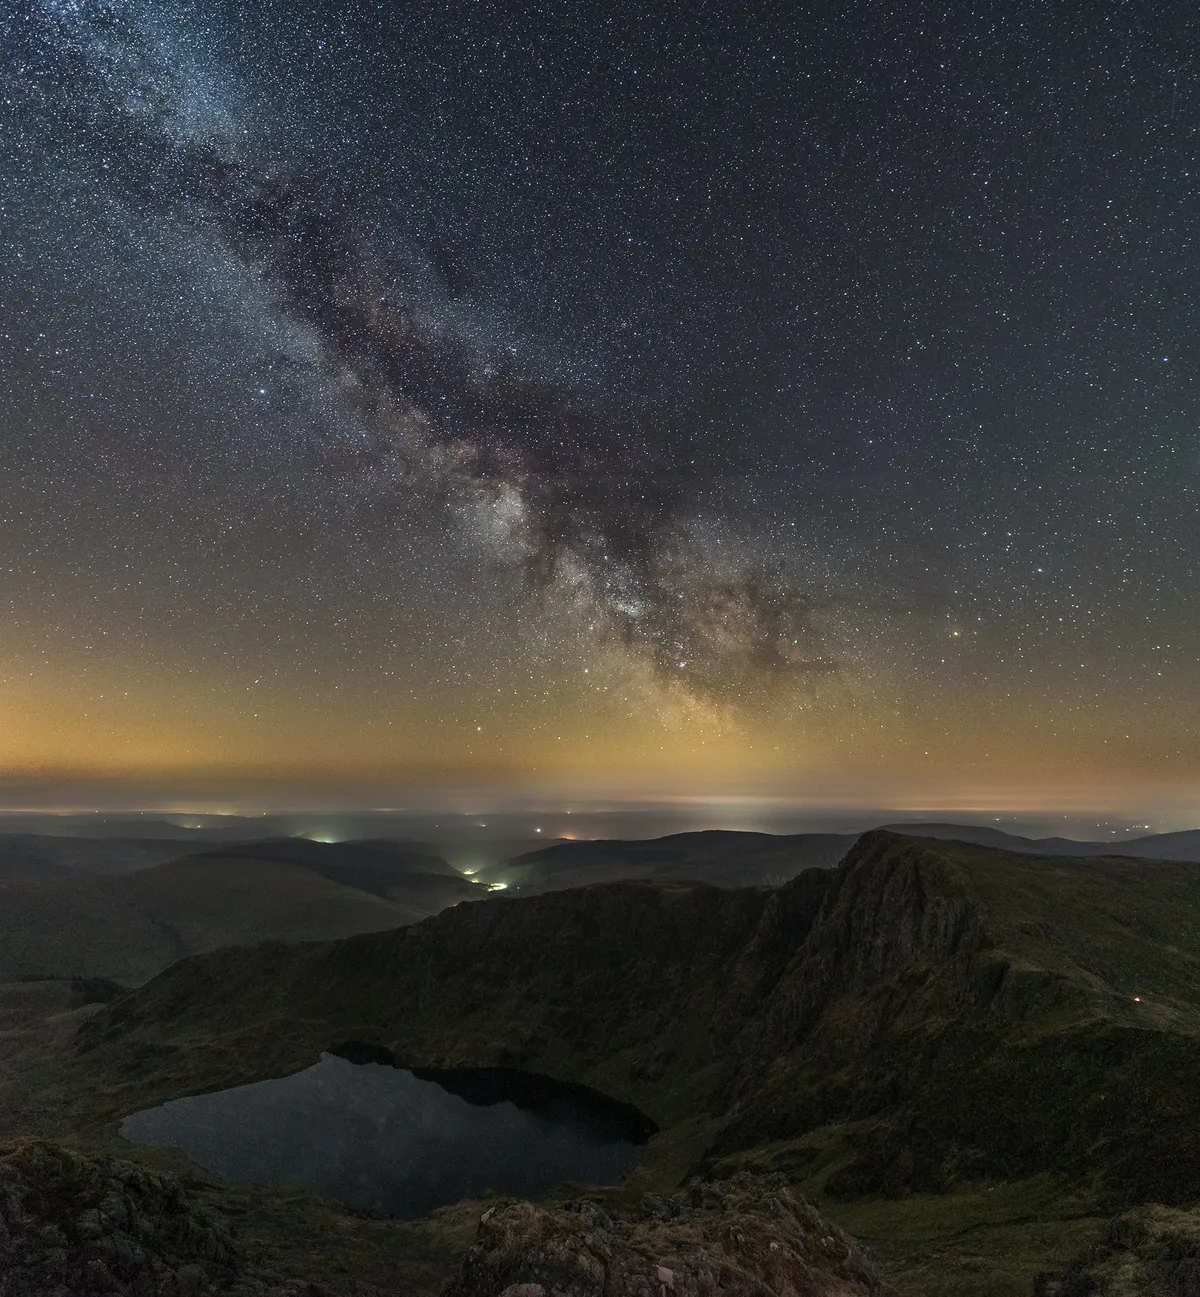 Cwm Cau Milky Way - Cadair Idris, Snowdonia by Kris Williams, Cadair Idris, Snowdonia. Equipment: Sony A7S, Batis 18mm F2.8